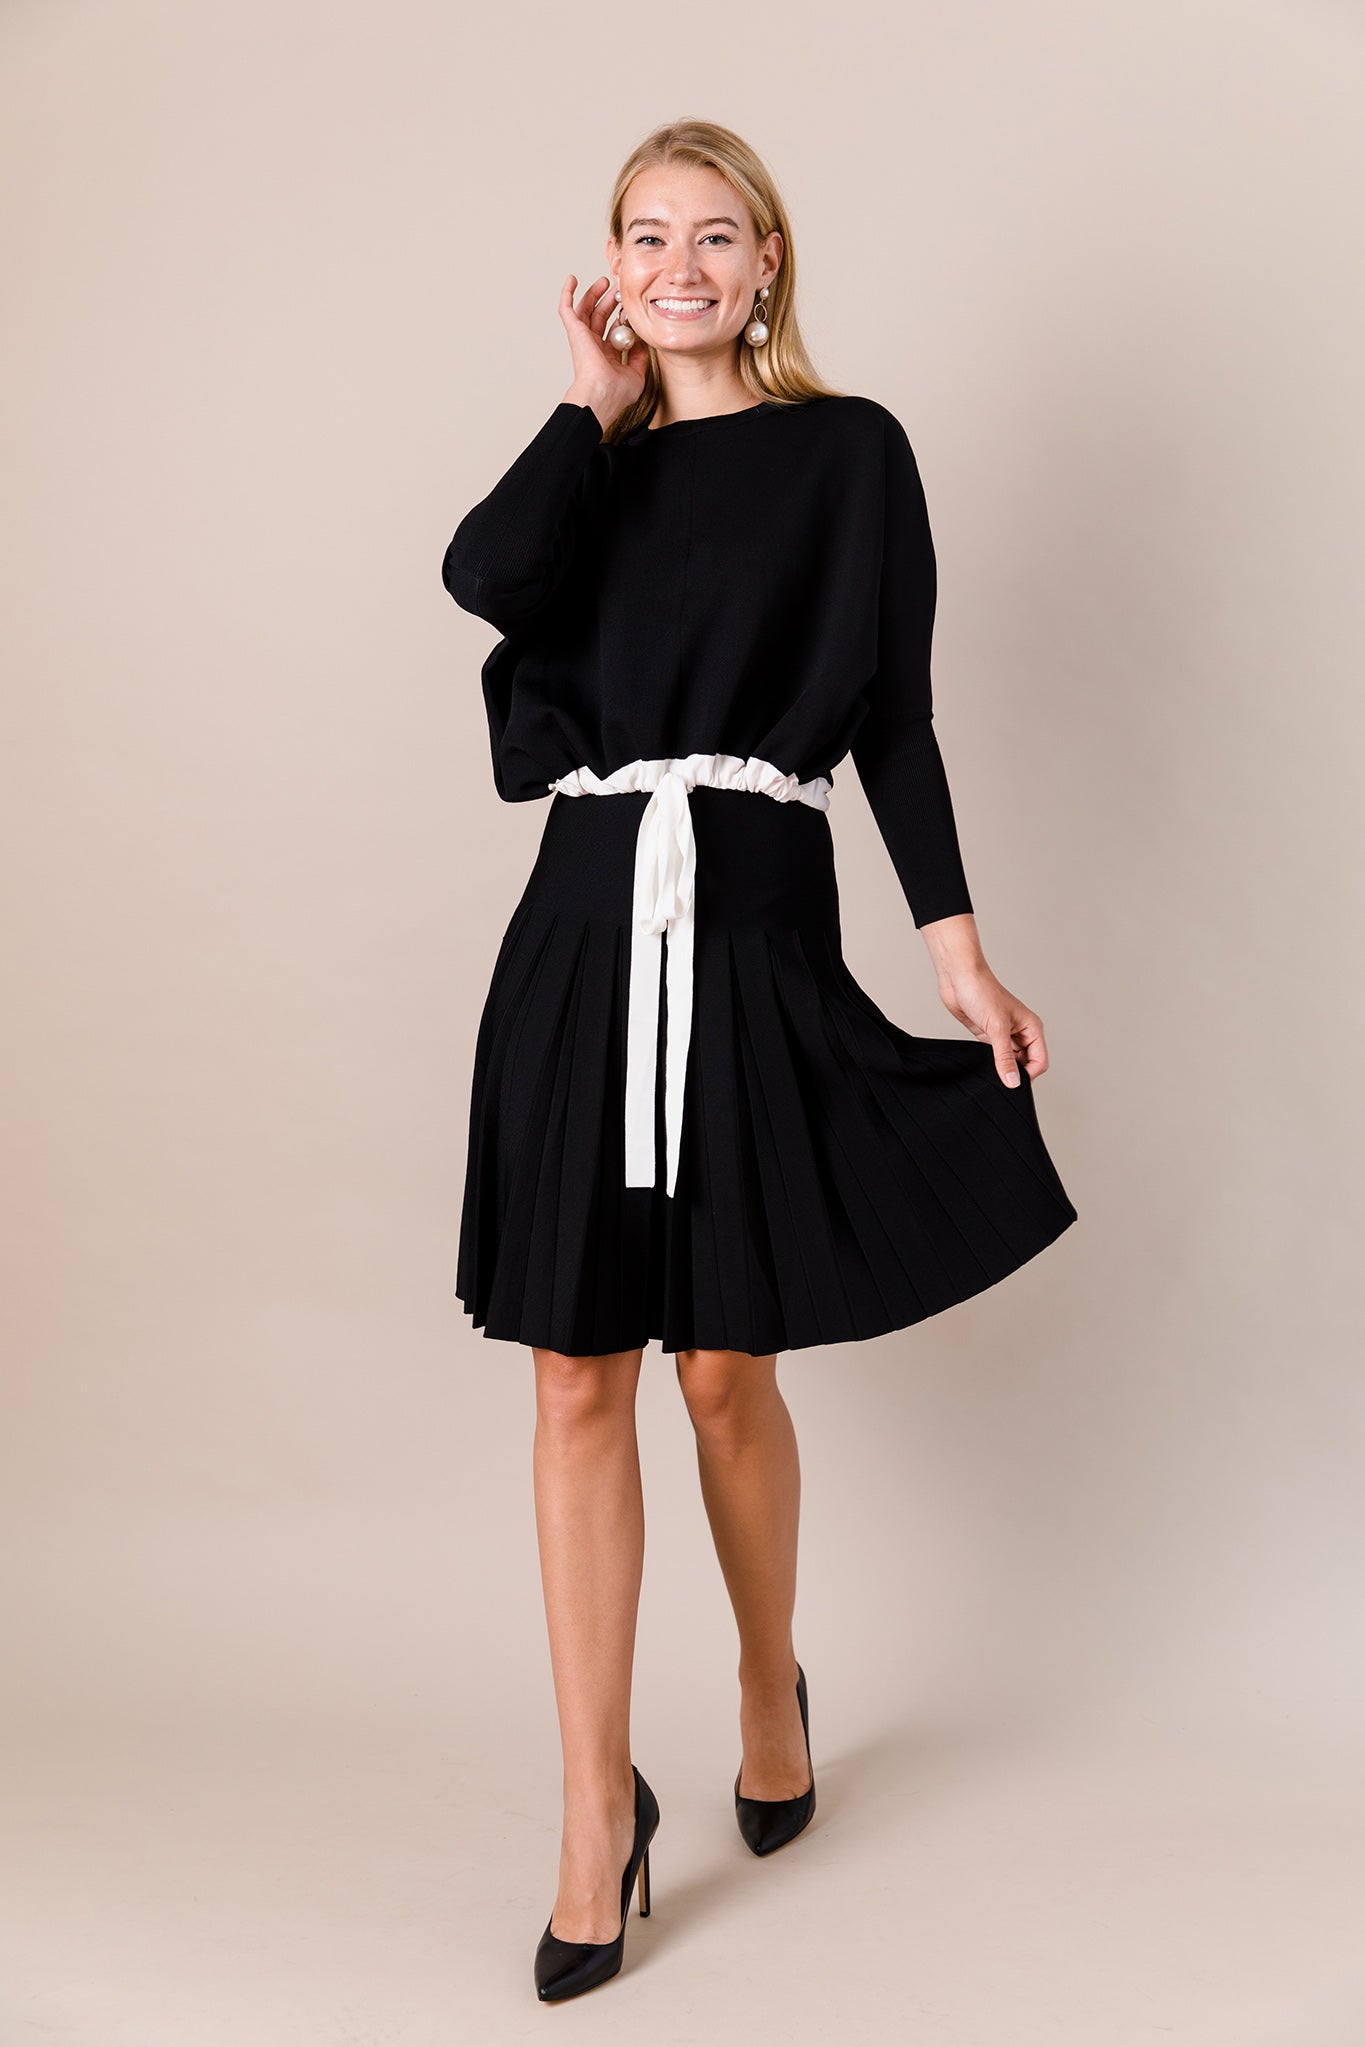 Drawstring Dolman Sleeve Sweater in Black/White Combo